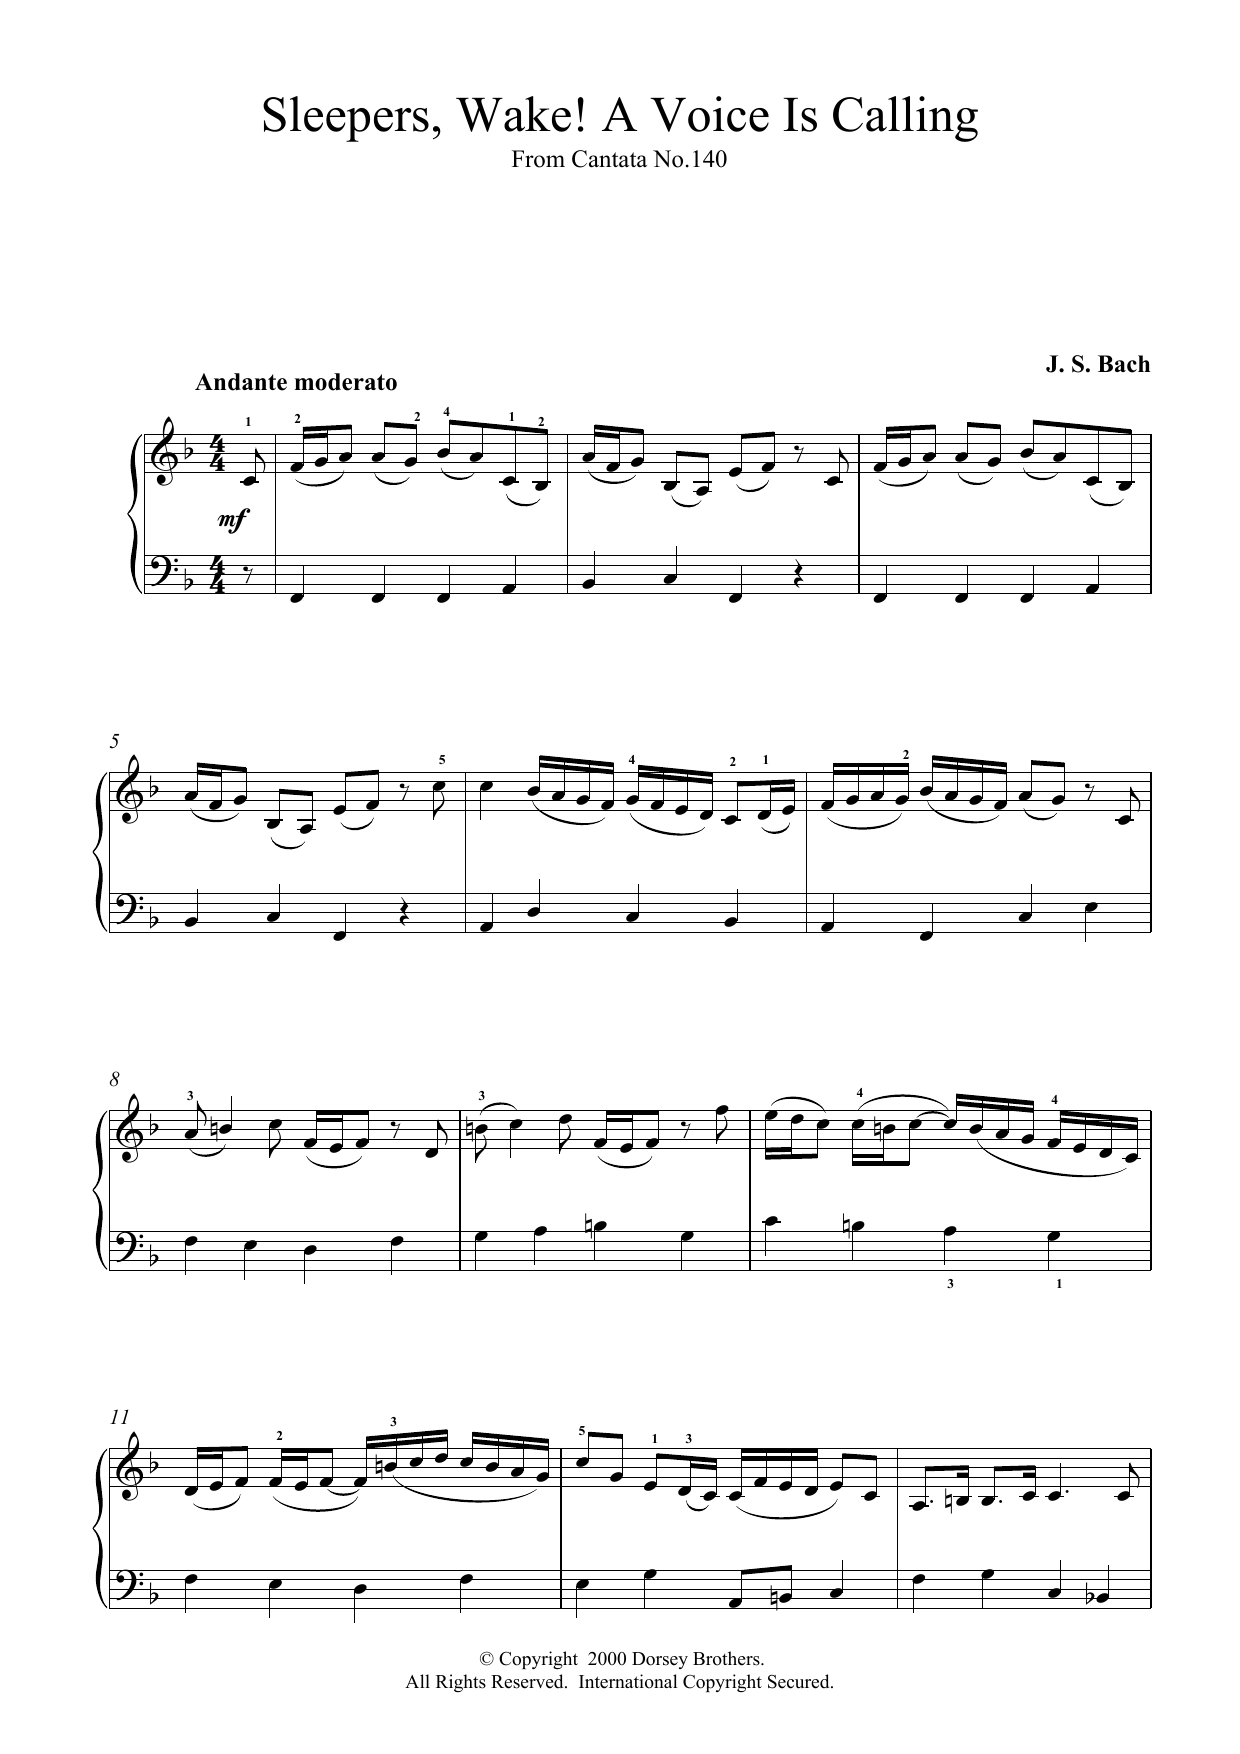 Johann Sebastian Bach Sleepers, Wake! A Voice Is Calling sheet music notes printable PDF score